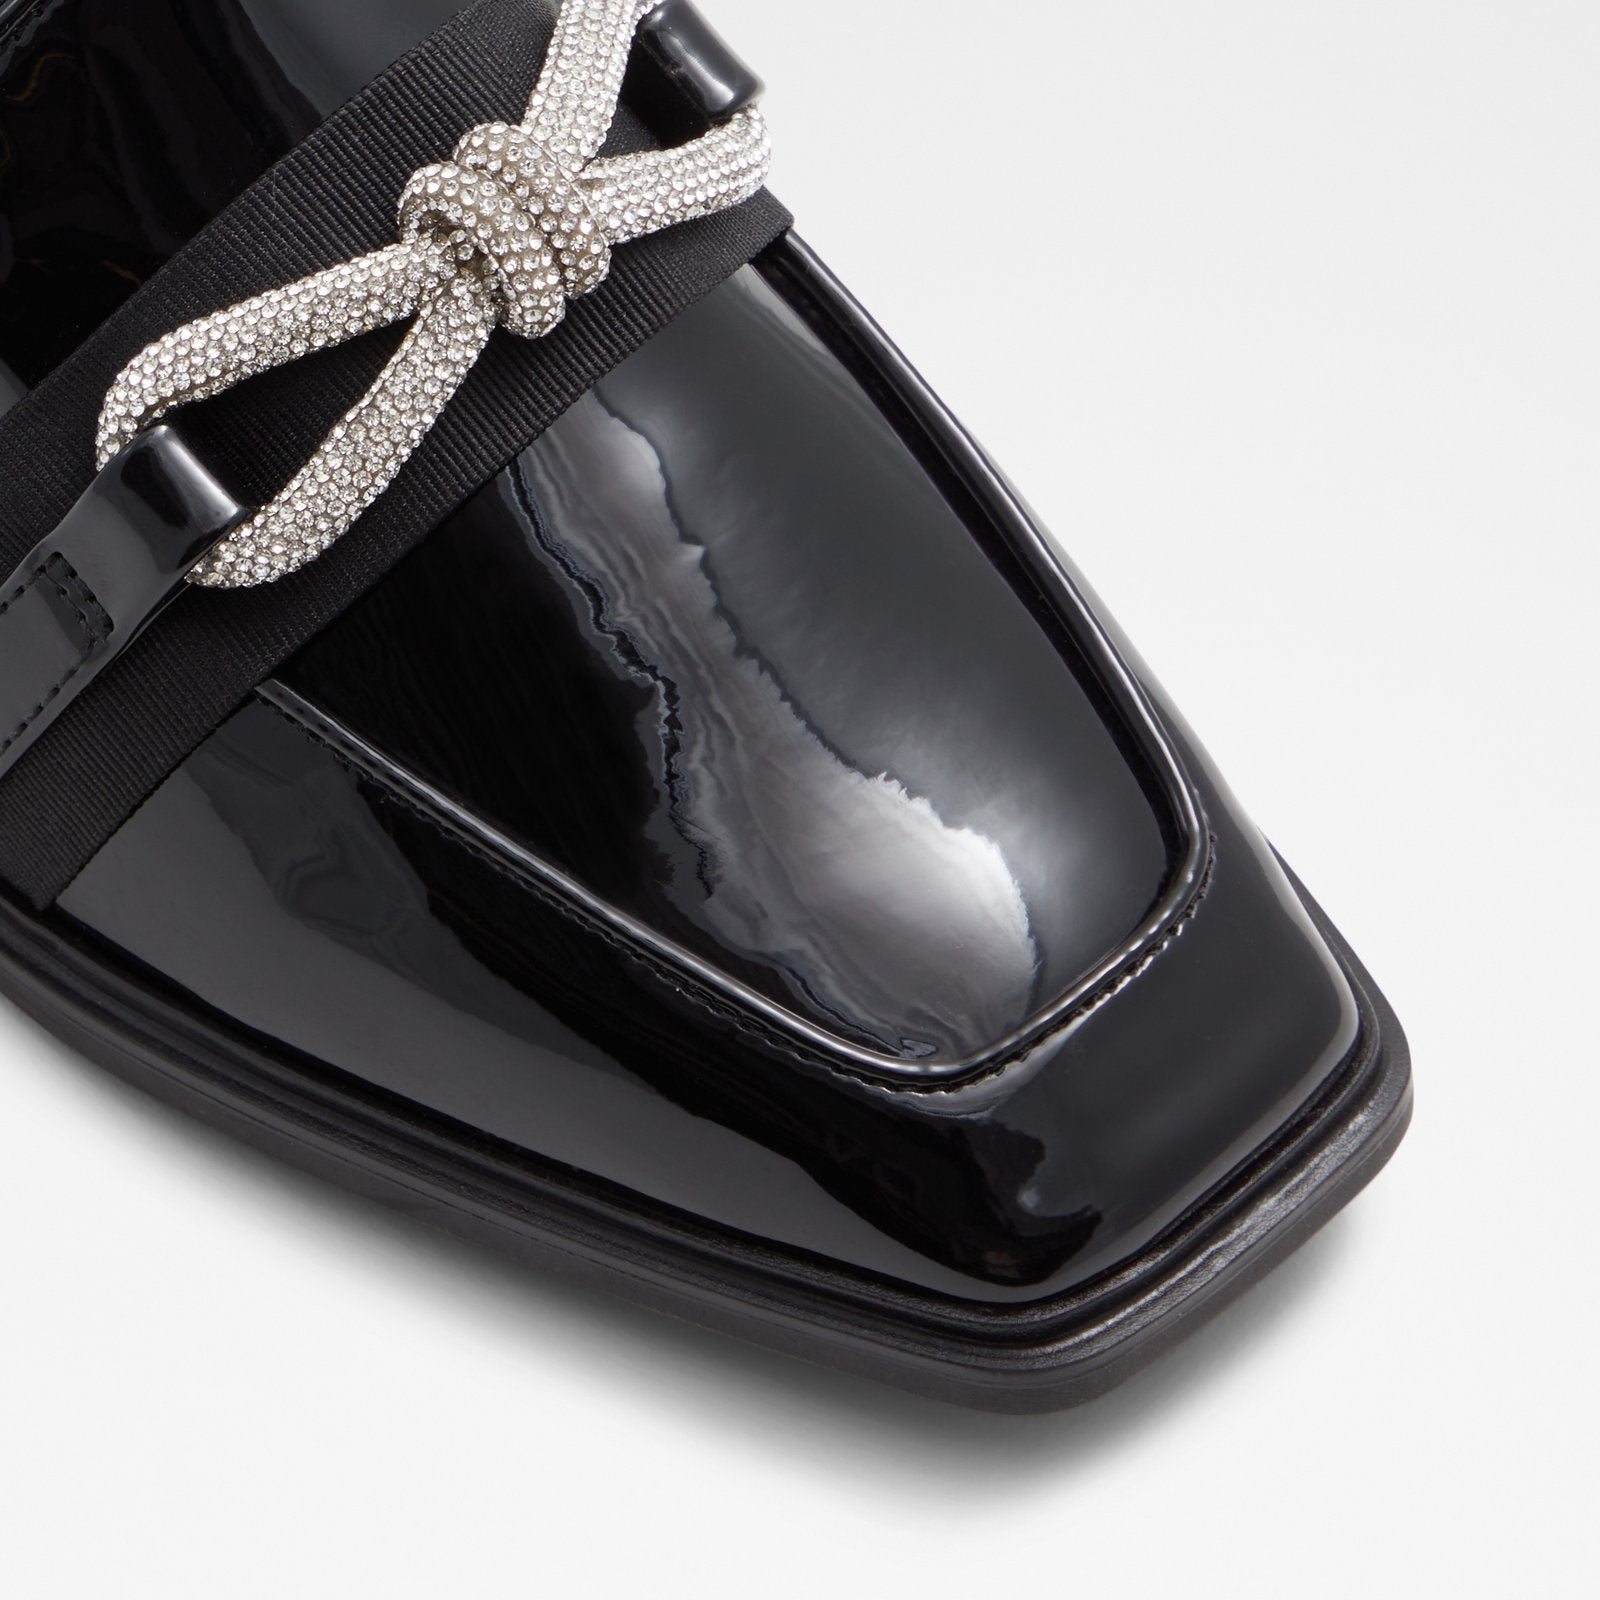 Encore / Loafers Women Shoes - Black - ALDO KSA